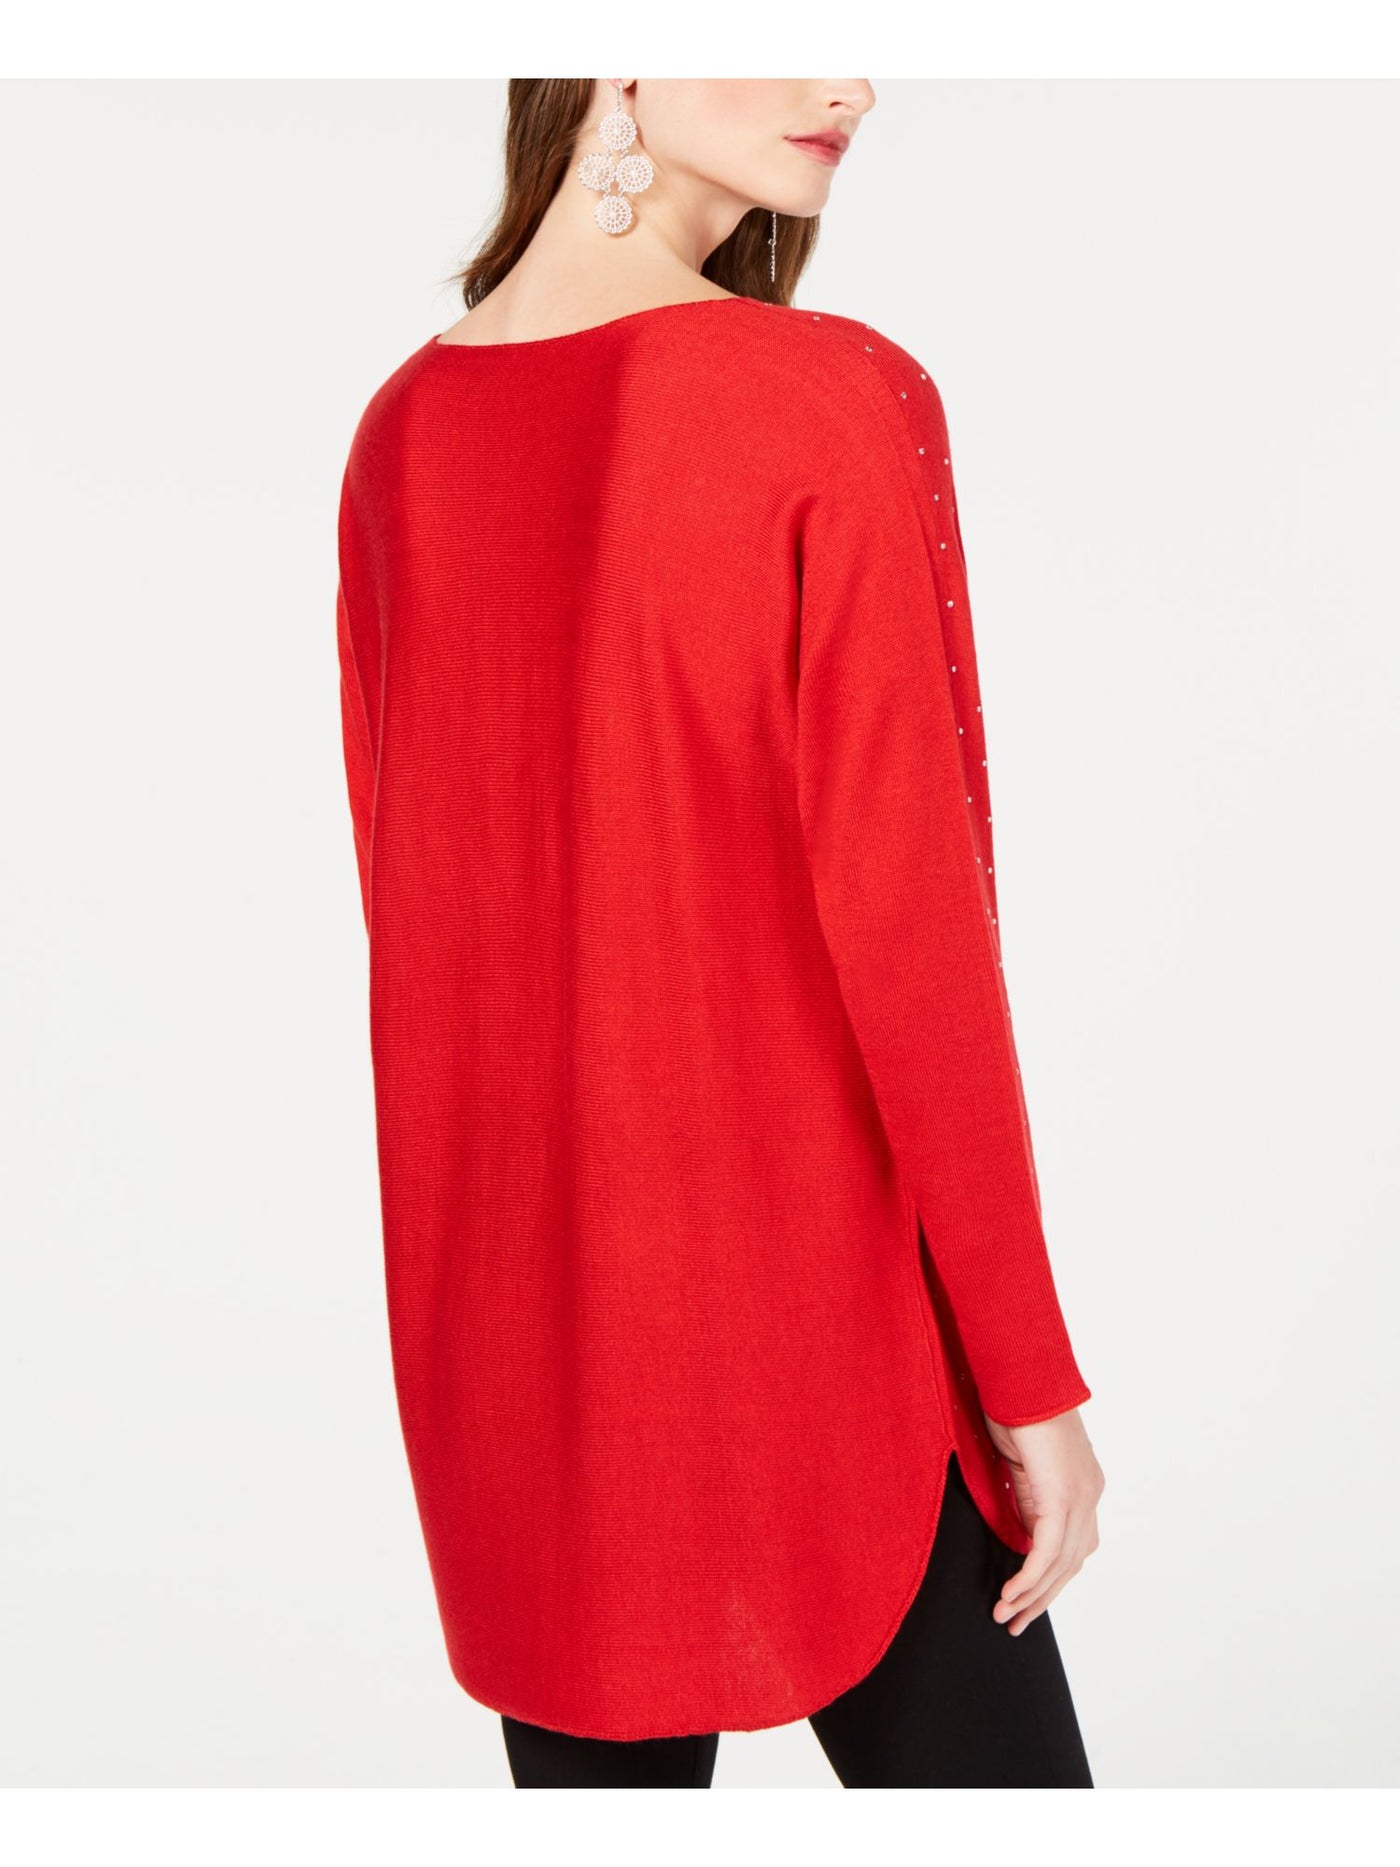 INC Womens Red Embellished Long Sleeve Jewel Neck Hi-Lo Sweater XS